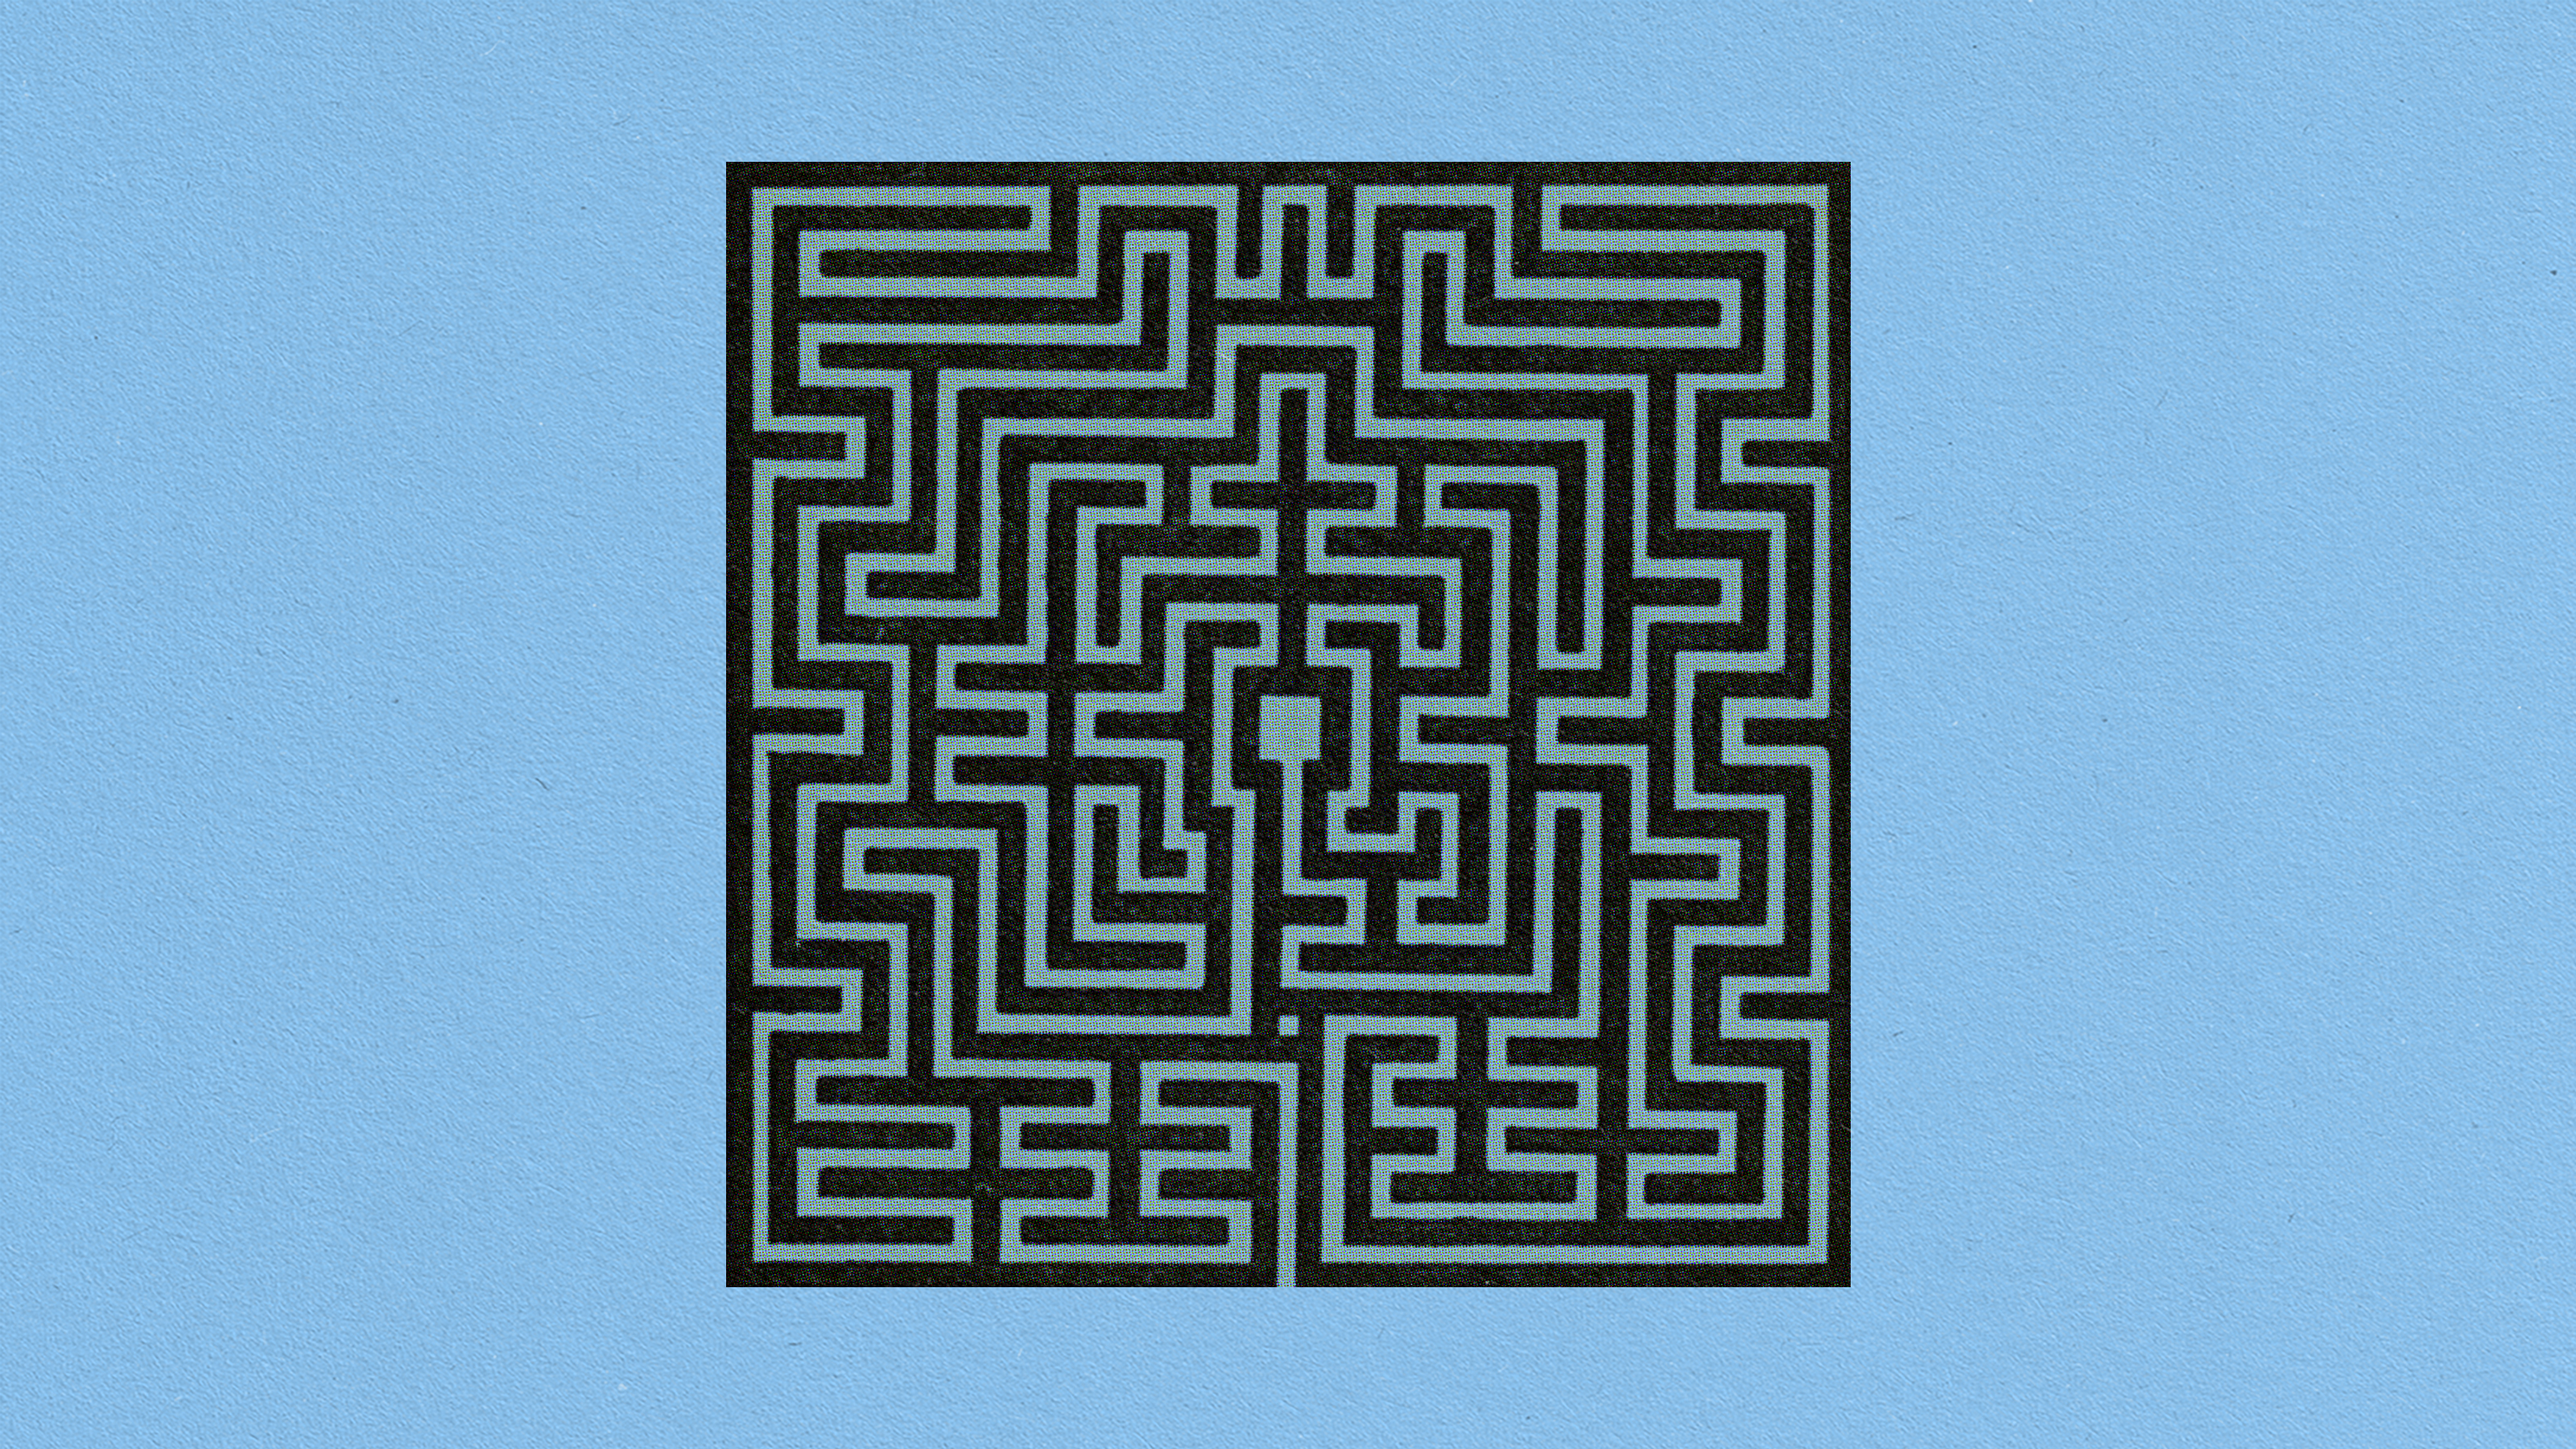 An agile maze on a blue background.